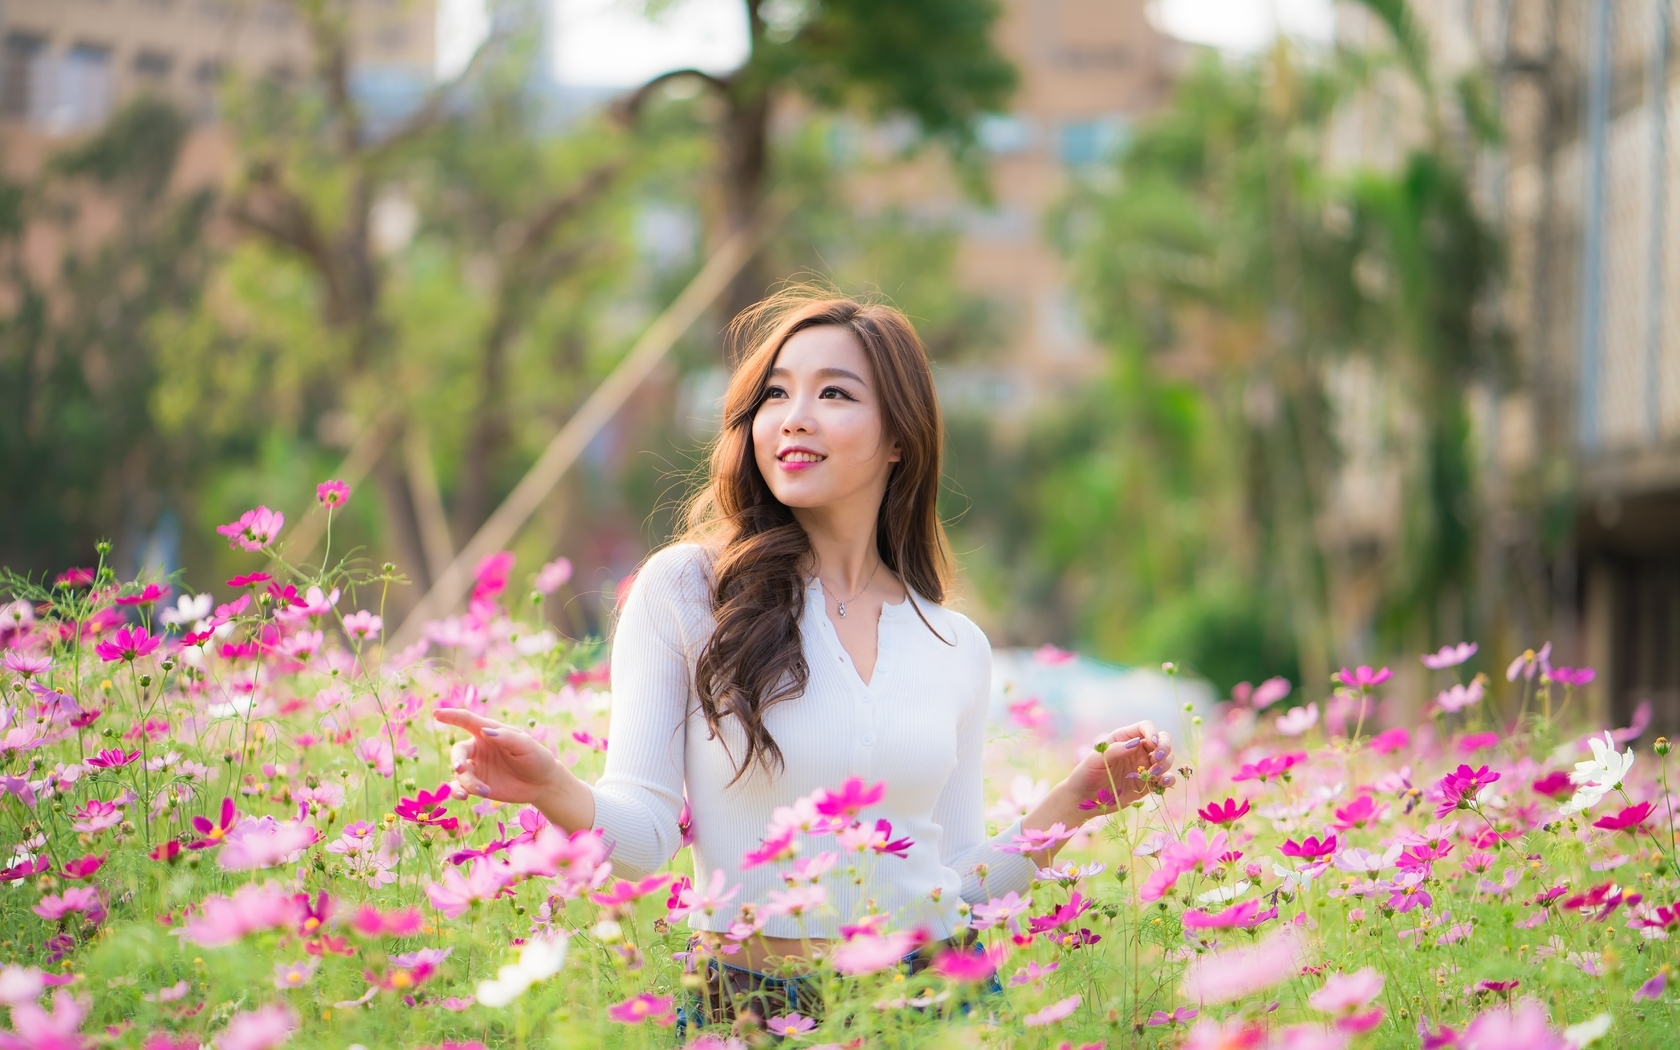 Image: Girl, smile, field, flowers, mood, summer